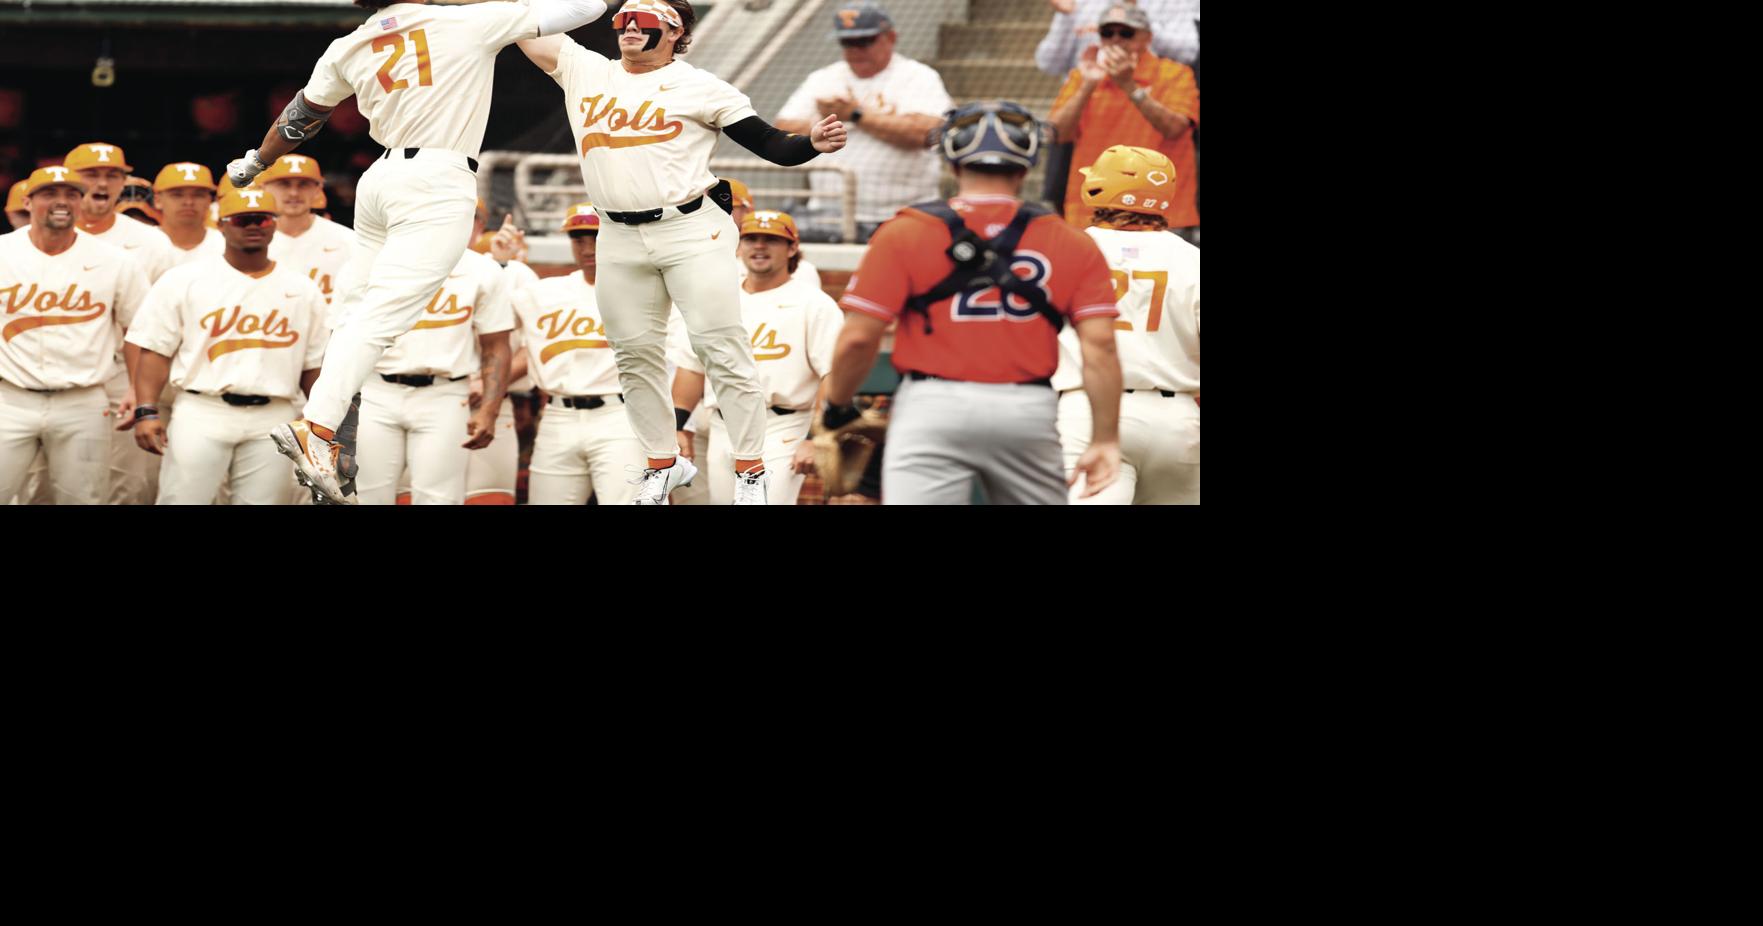 Jordan Beck - Baseball - University of Tennessee Athletics